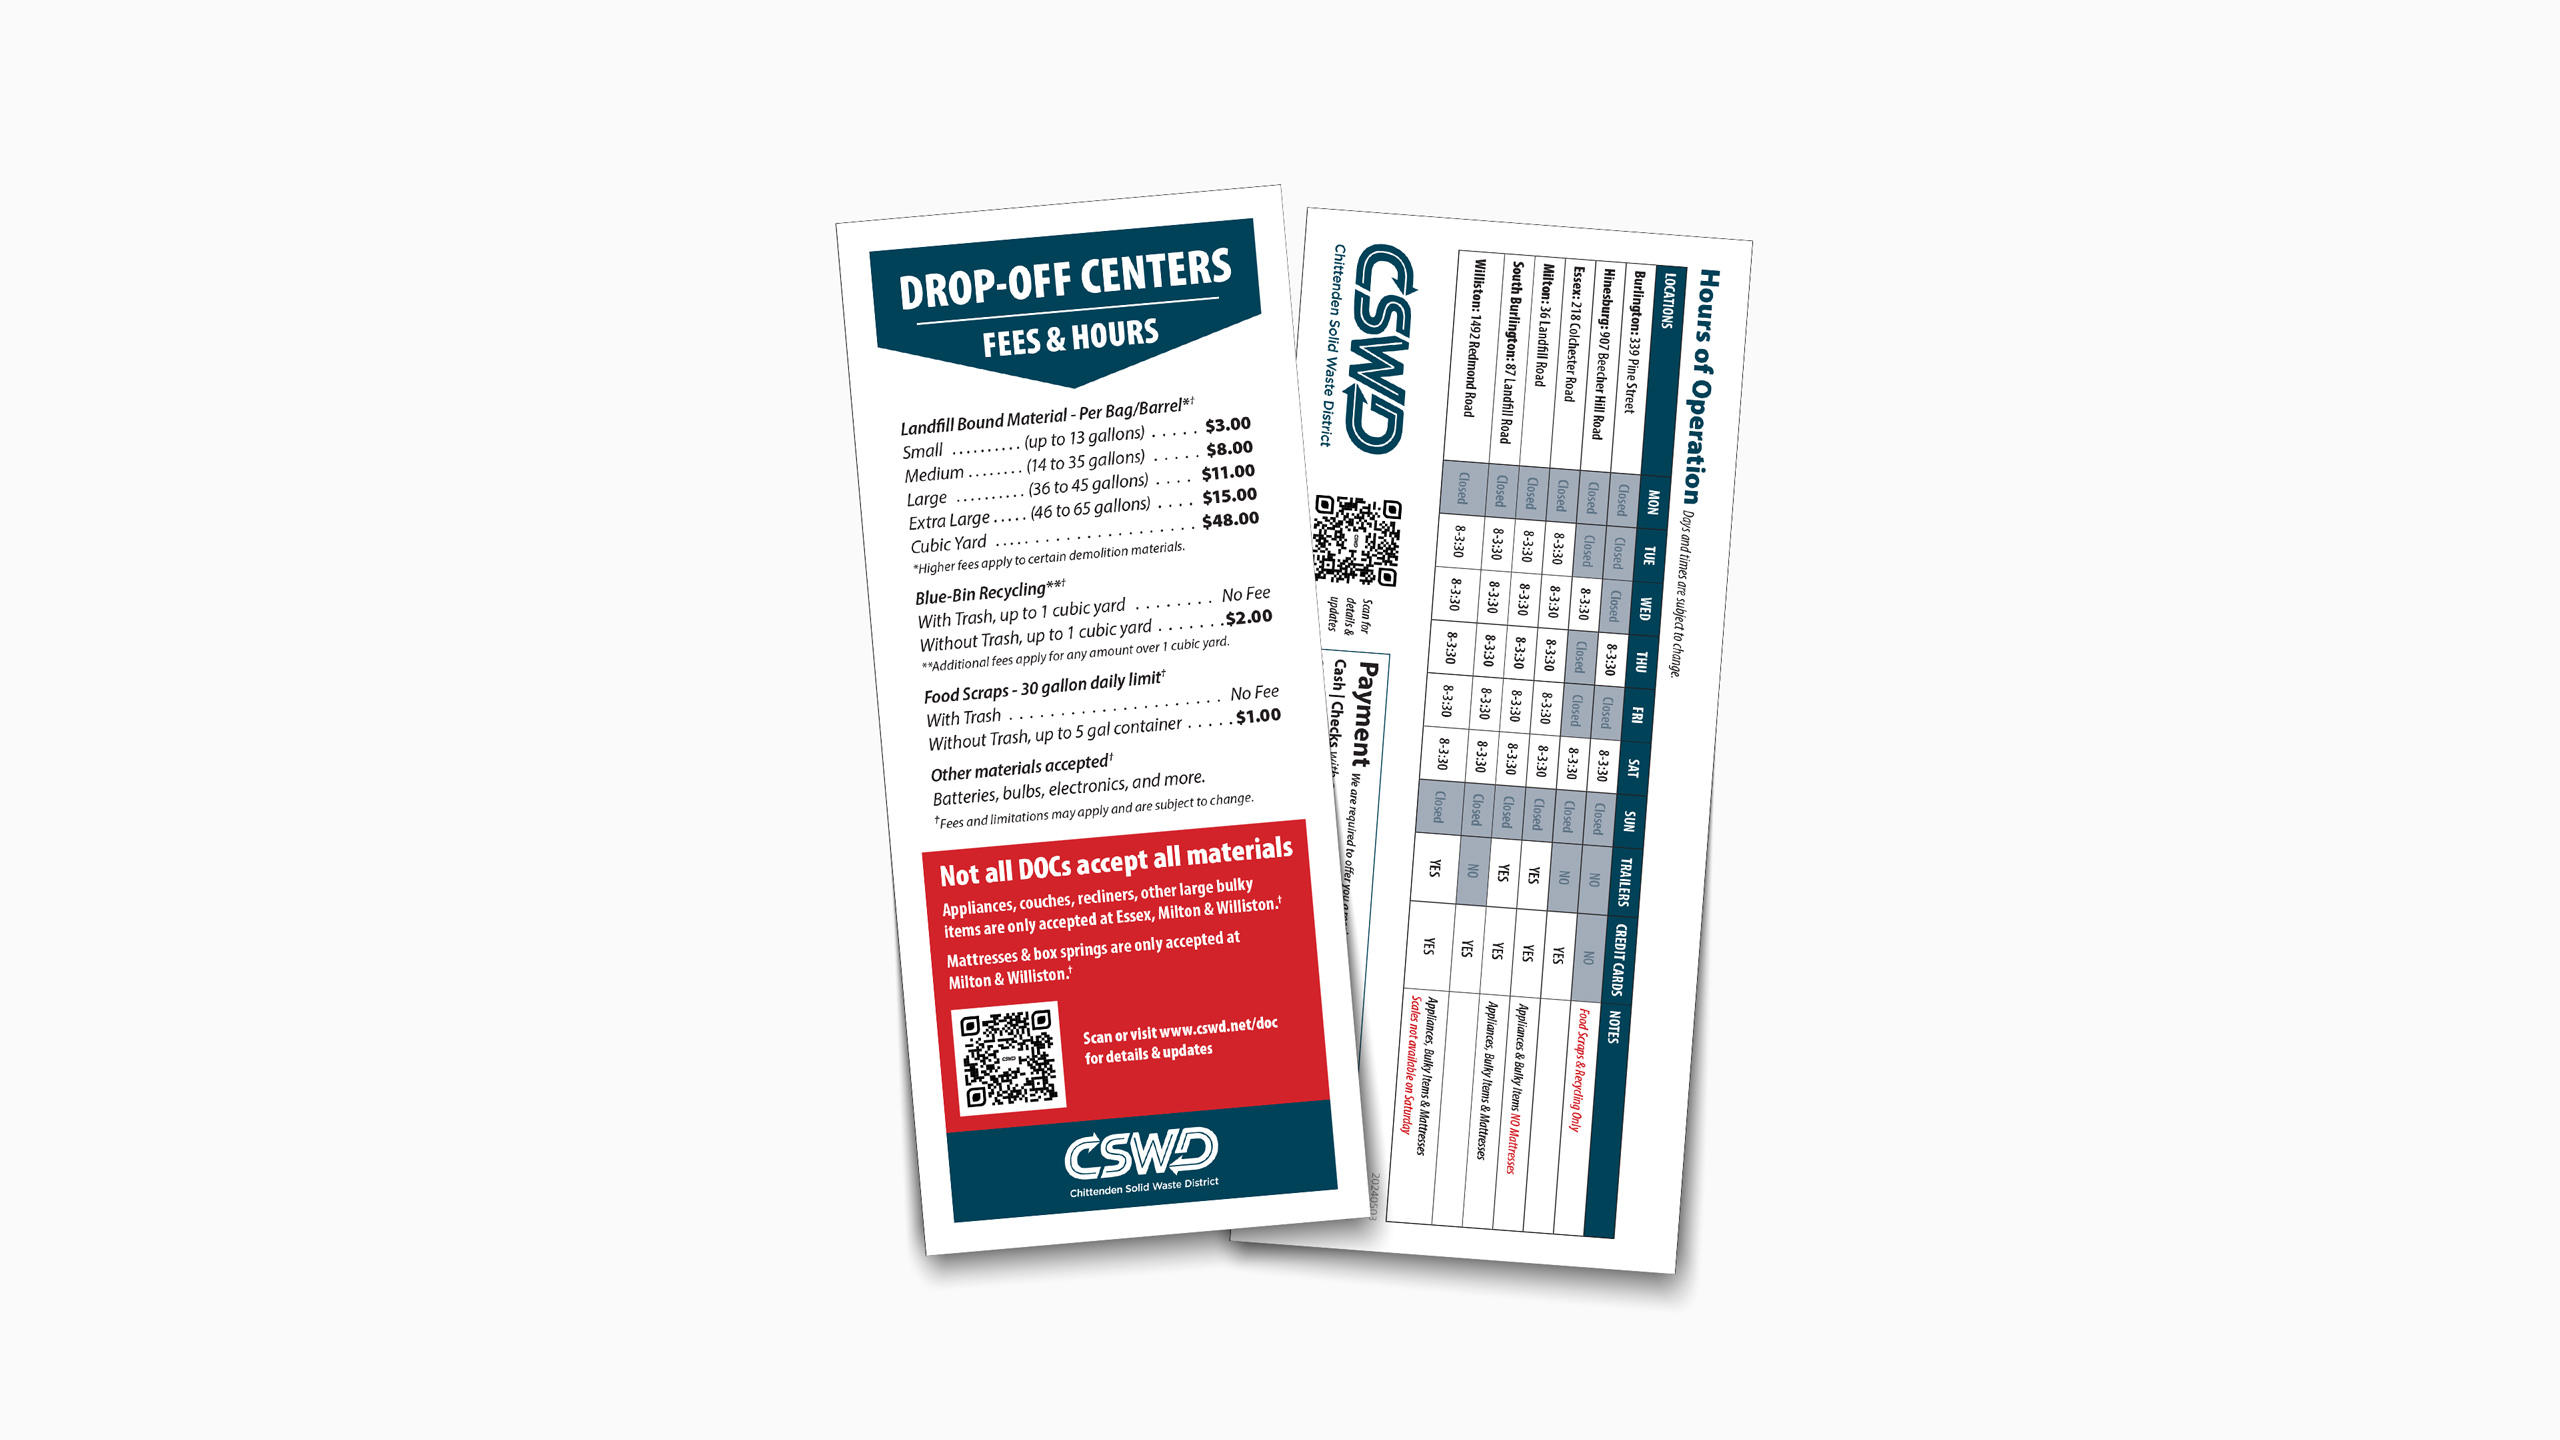 CSWD Drop-Off Center Fees & Hours handout